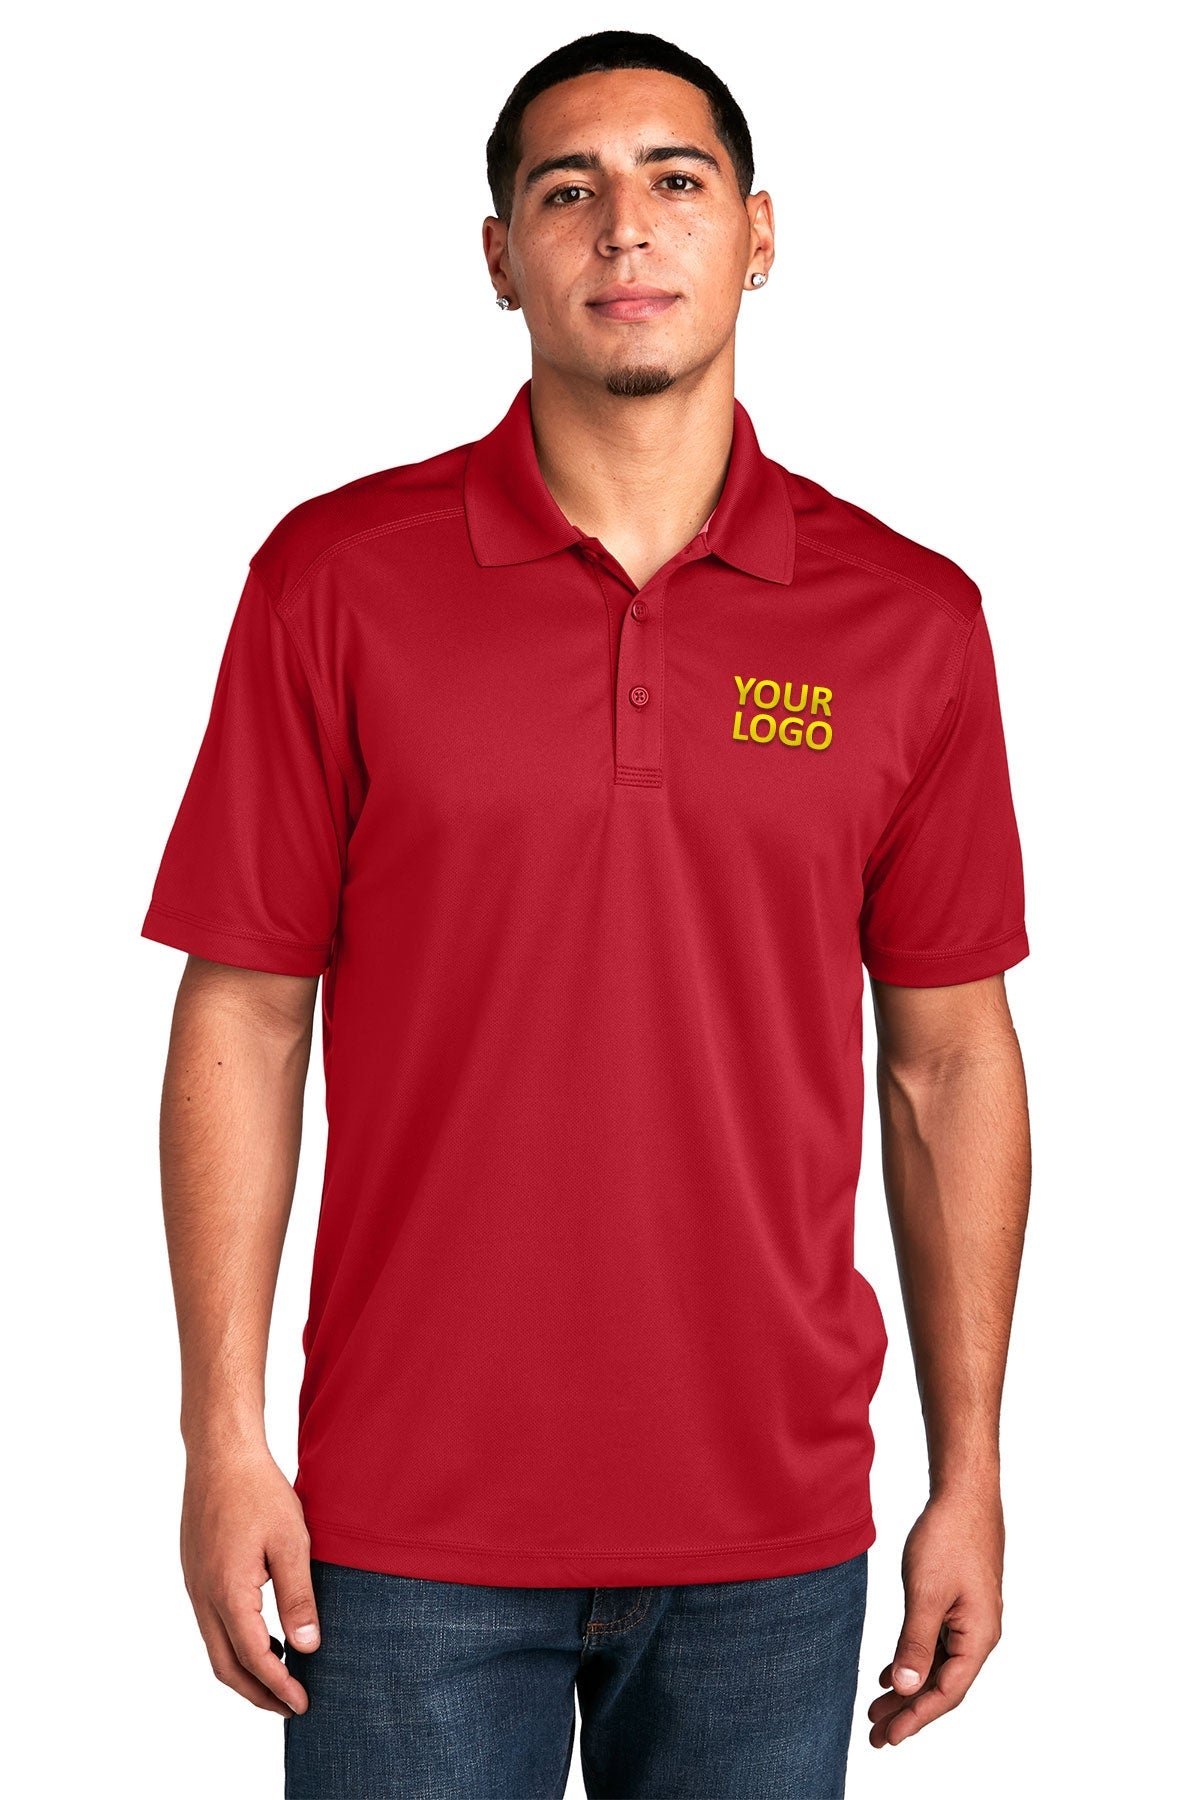 Sport-Tek True Red ST680 custom made work polo shirts